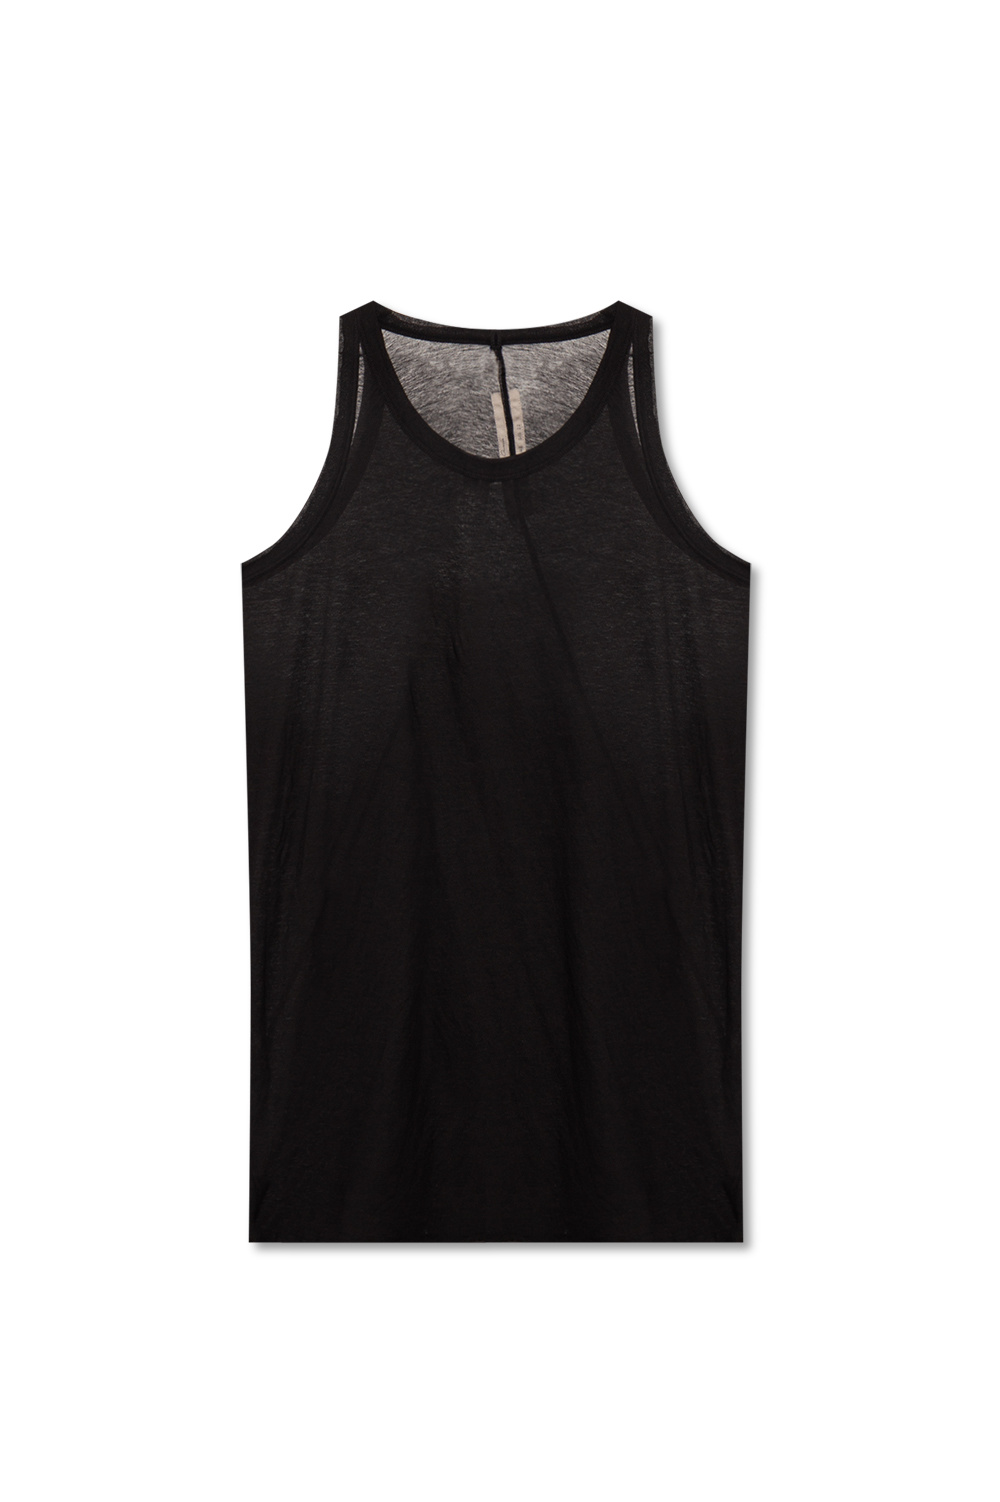 Mens Clothing T-shirts Sleeveless t-shirts Rick Owens Sleeveless Top in Black for Men 